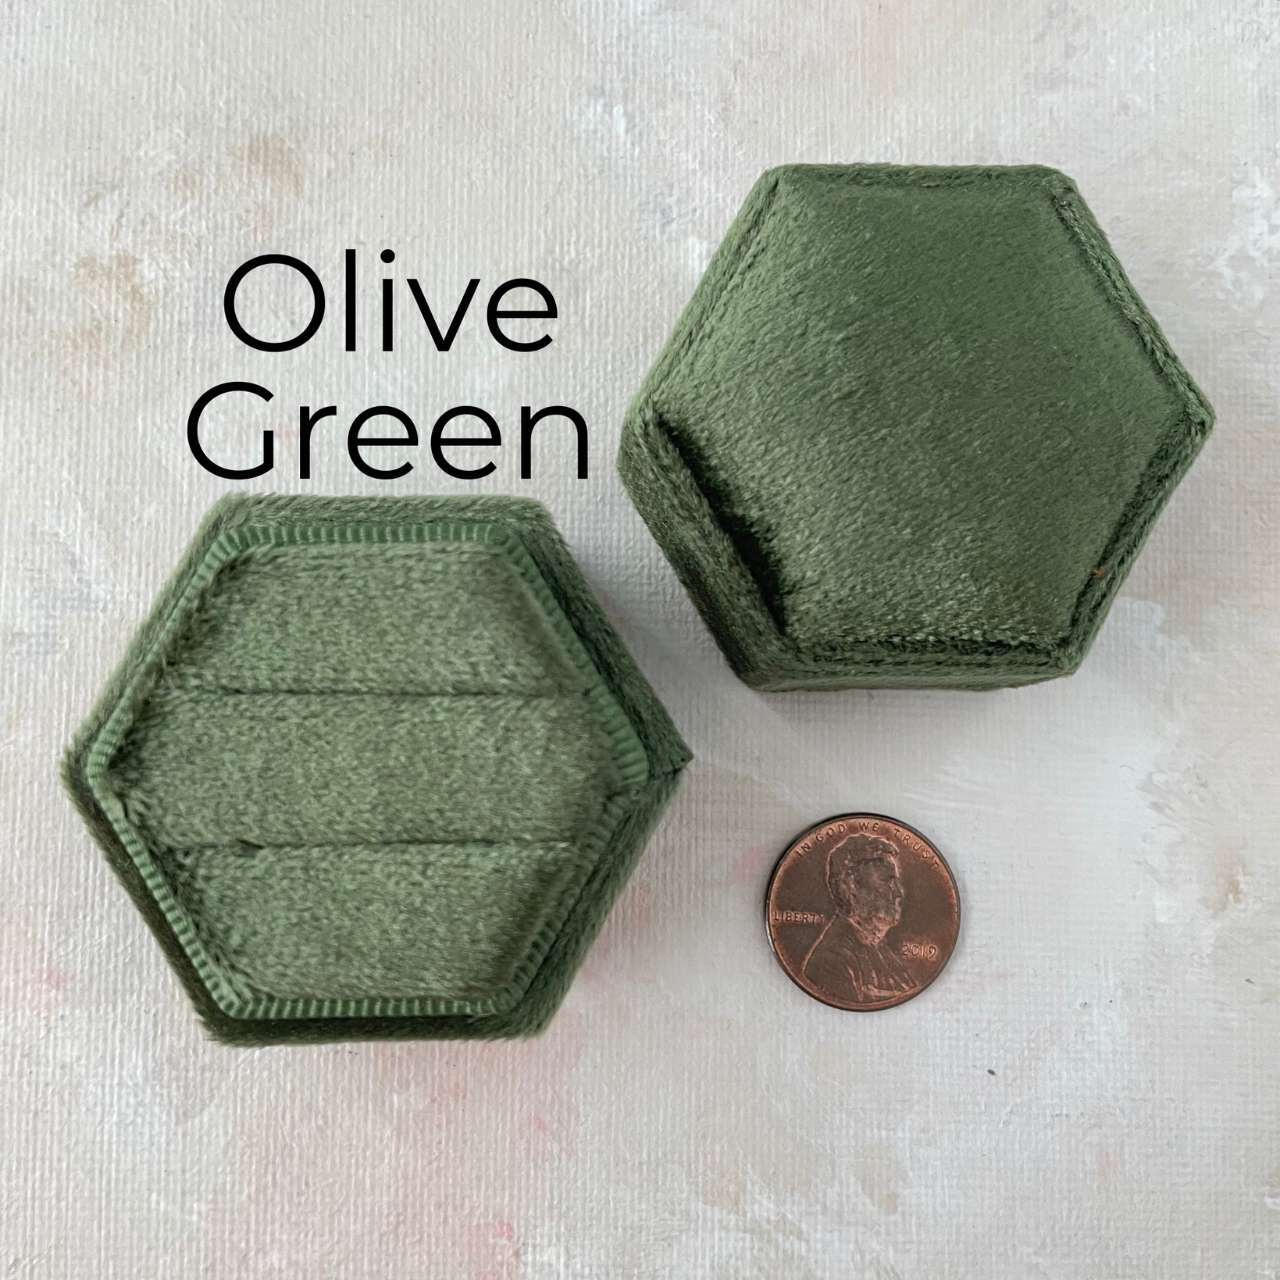 Fall Terracotta & Olive Styling Kit